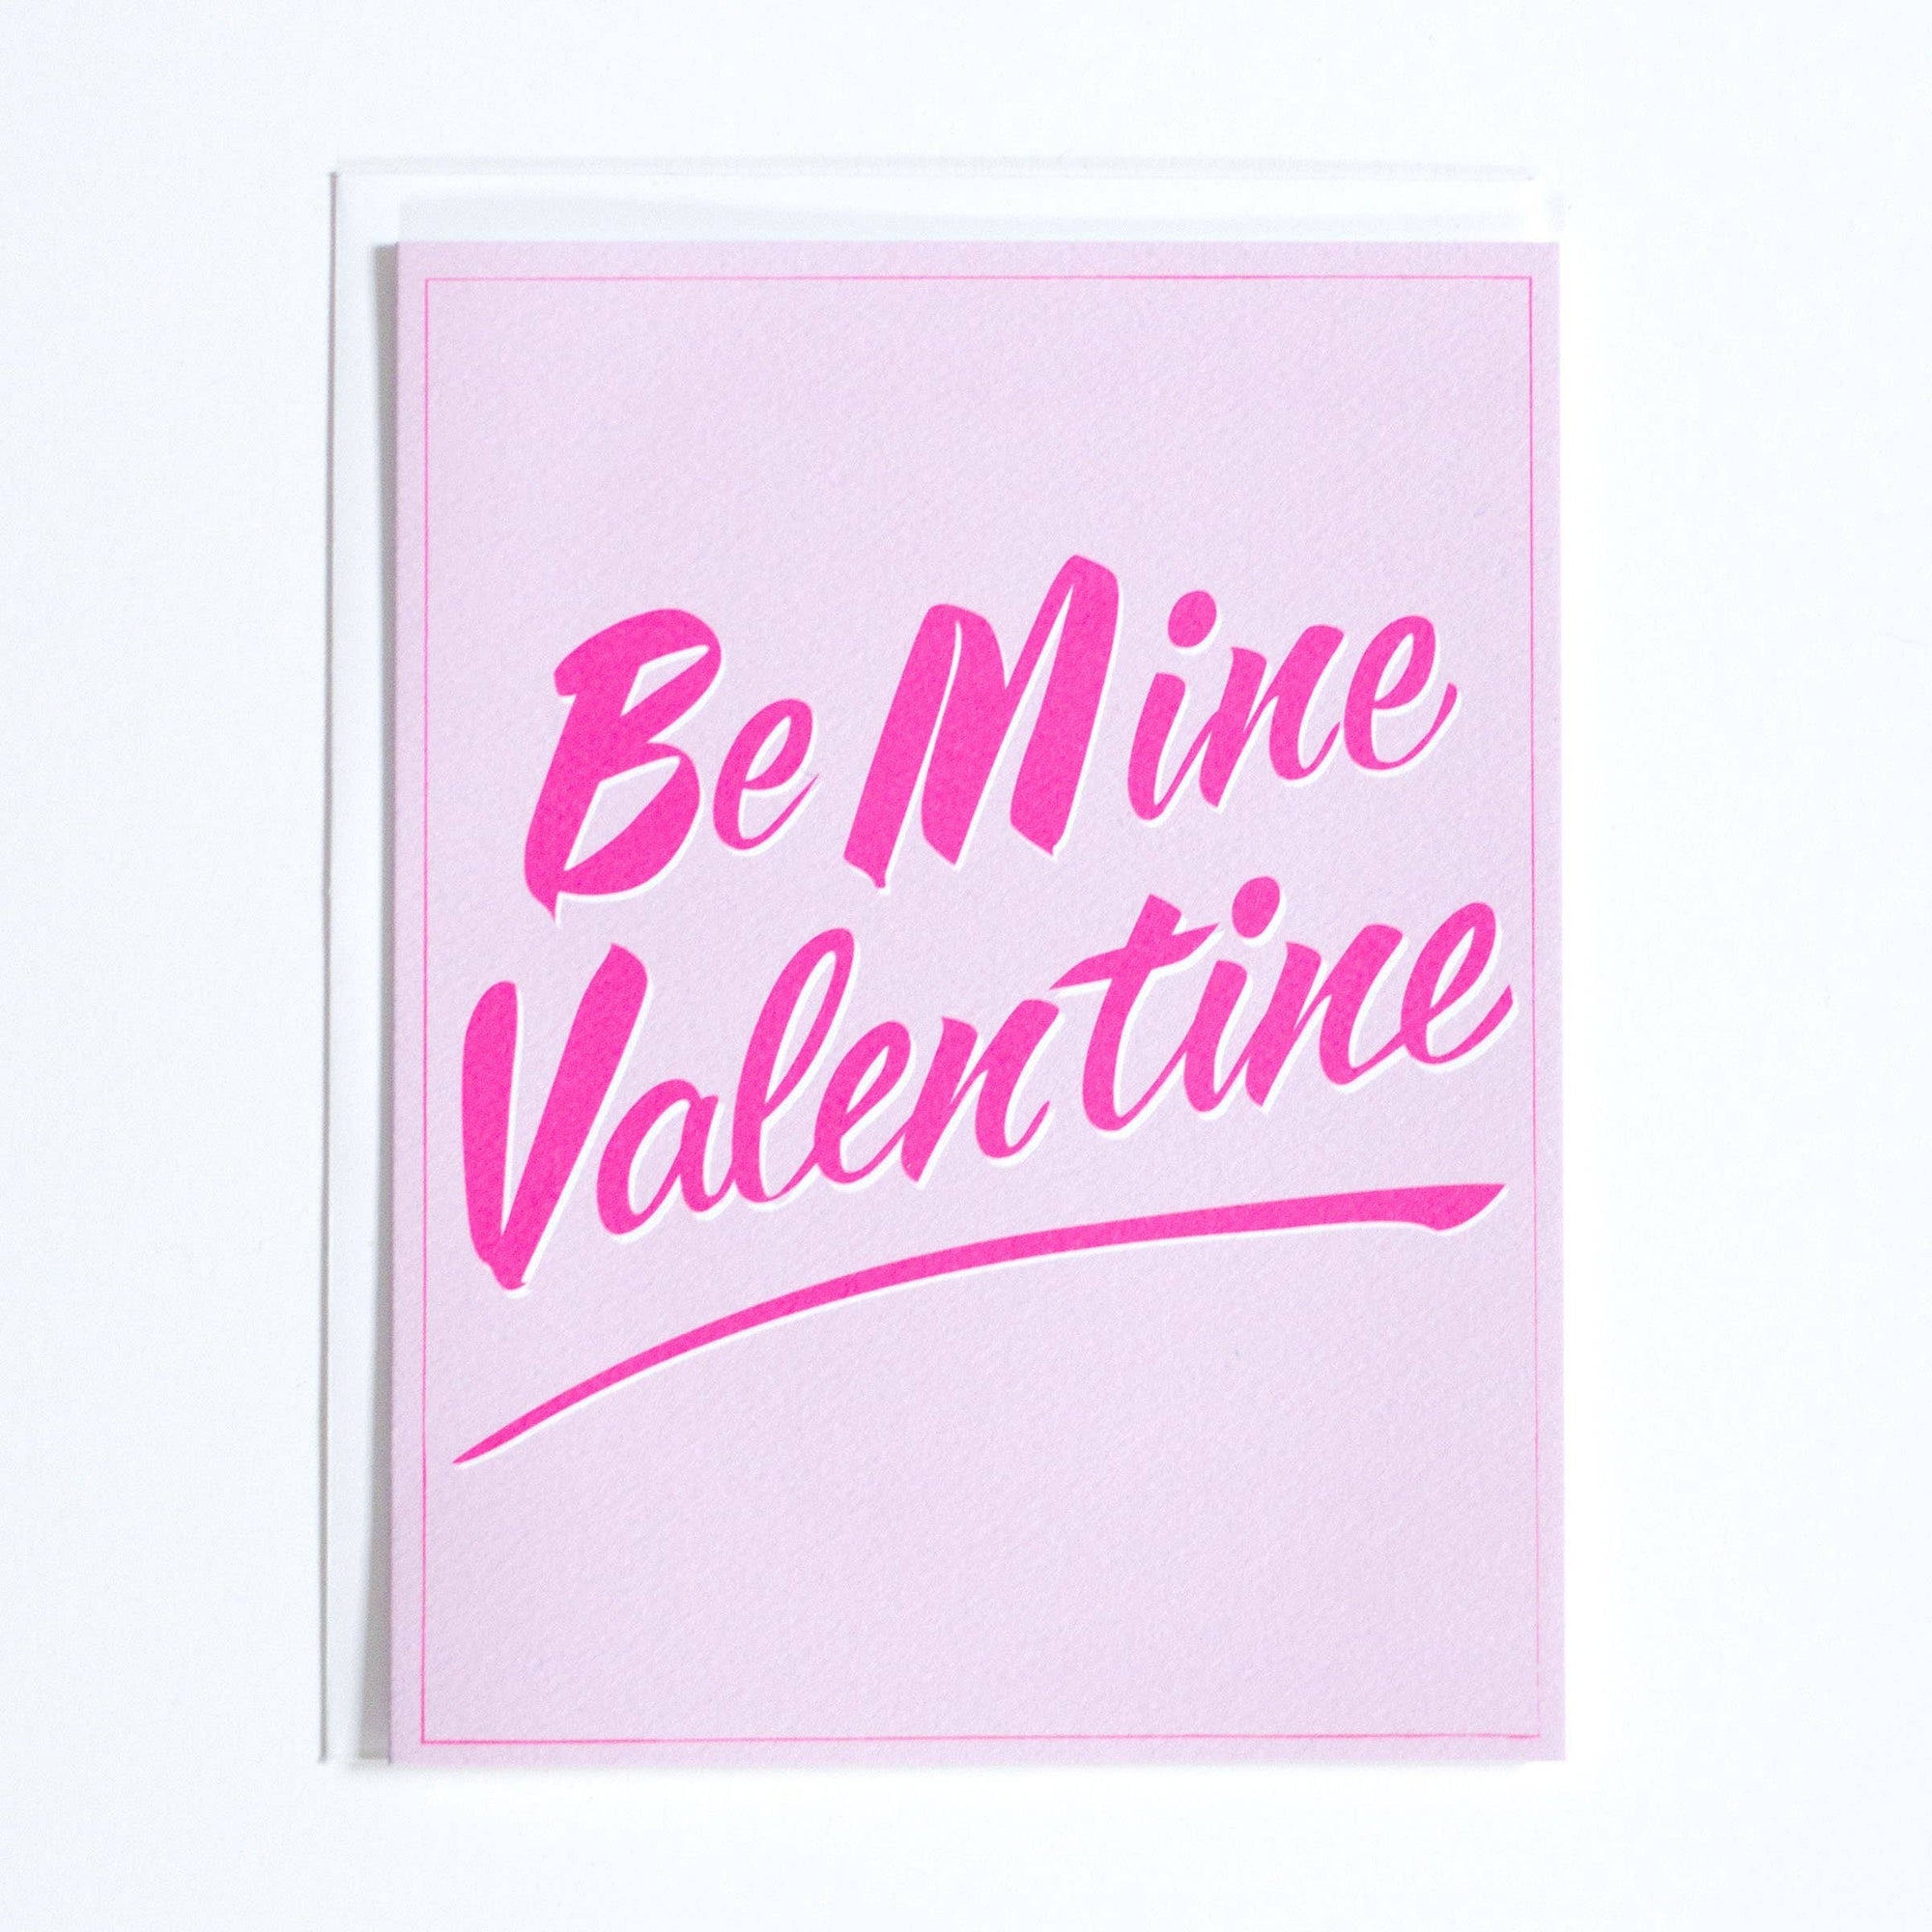 Be Mine Valentine text